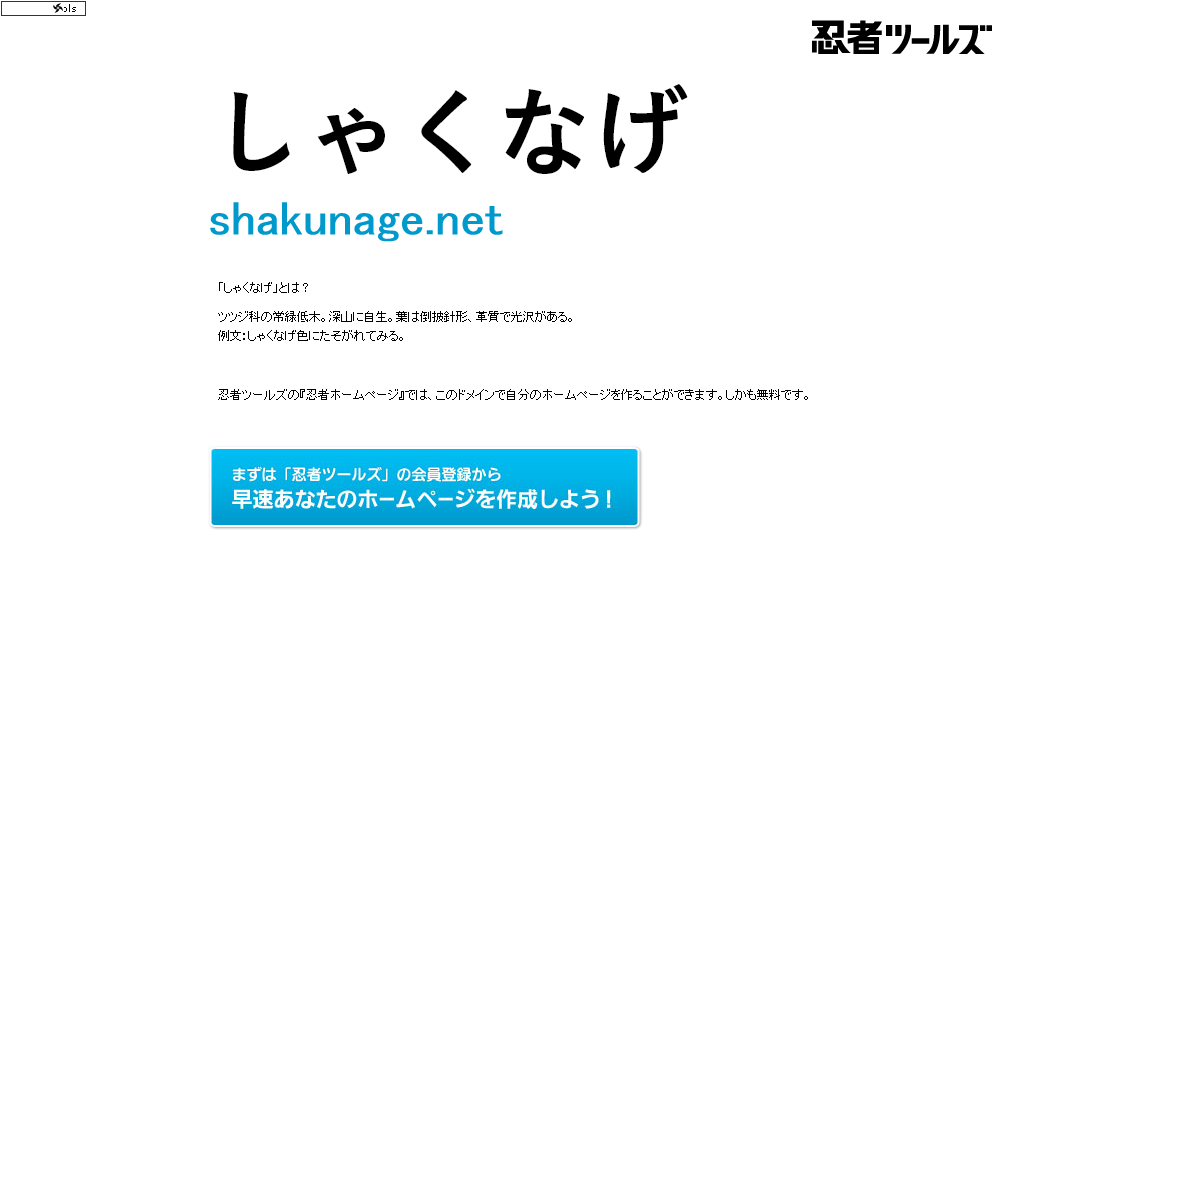 A complete backup of shakunage.net